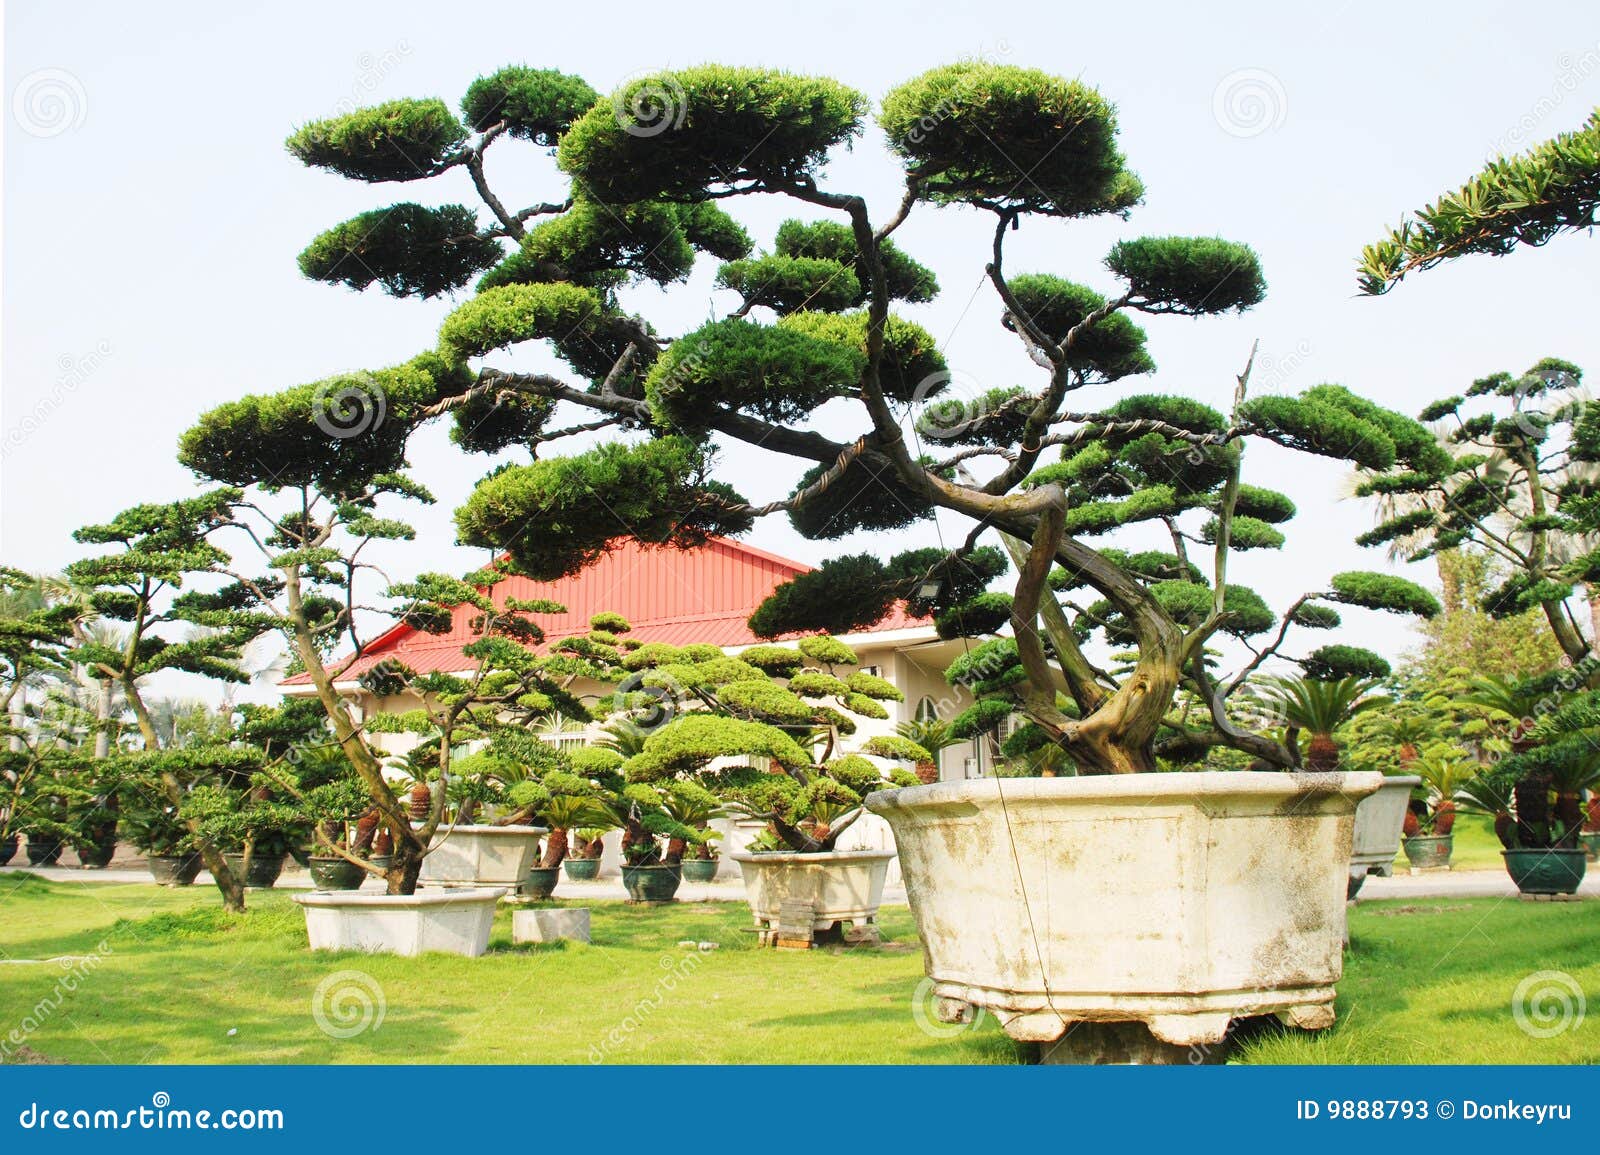 The Chinese Bonsai Garden Stock Image Image Of Gardening 9888793